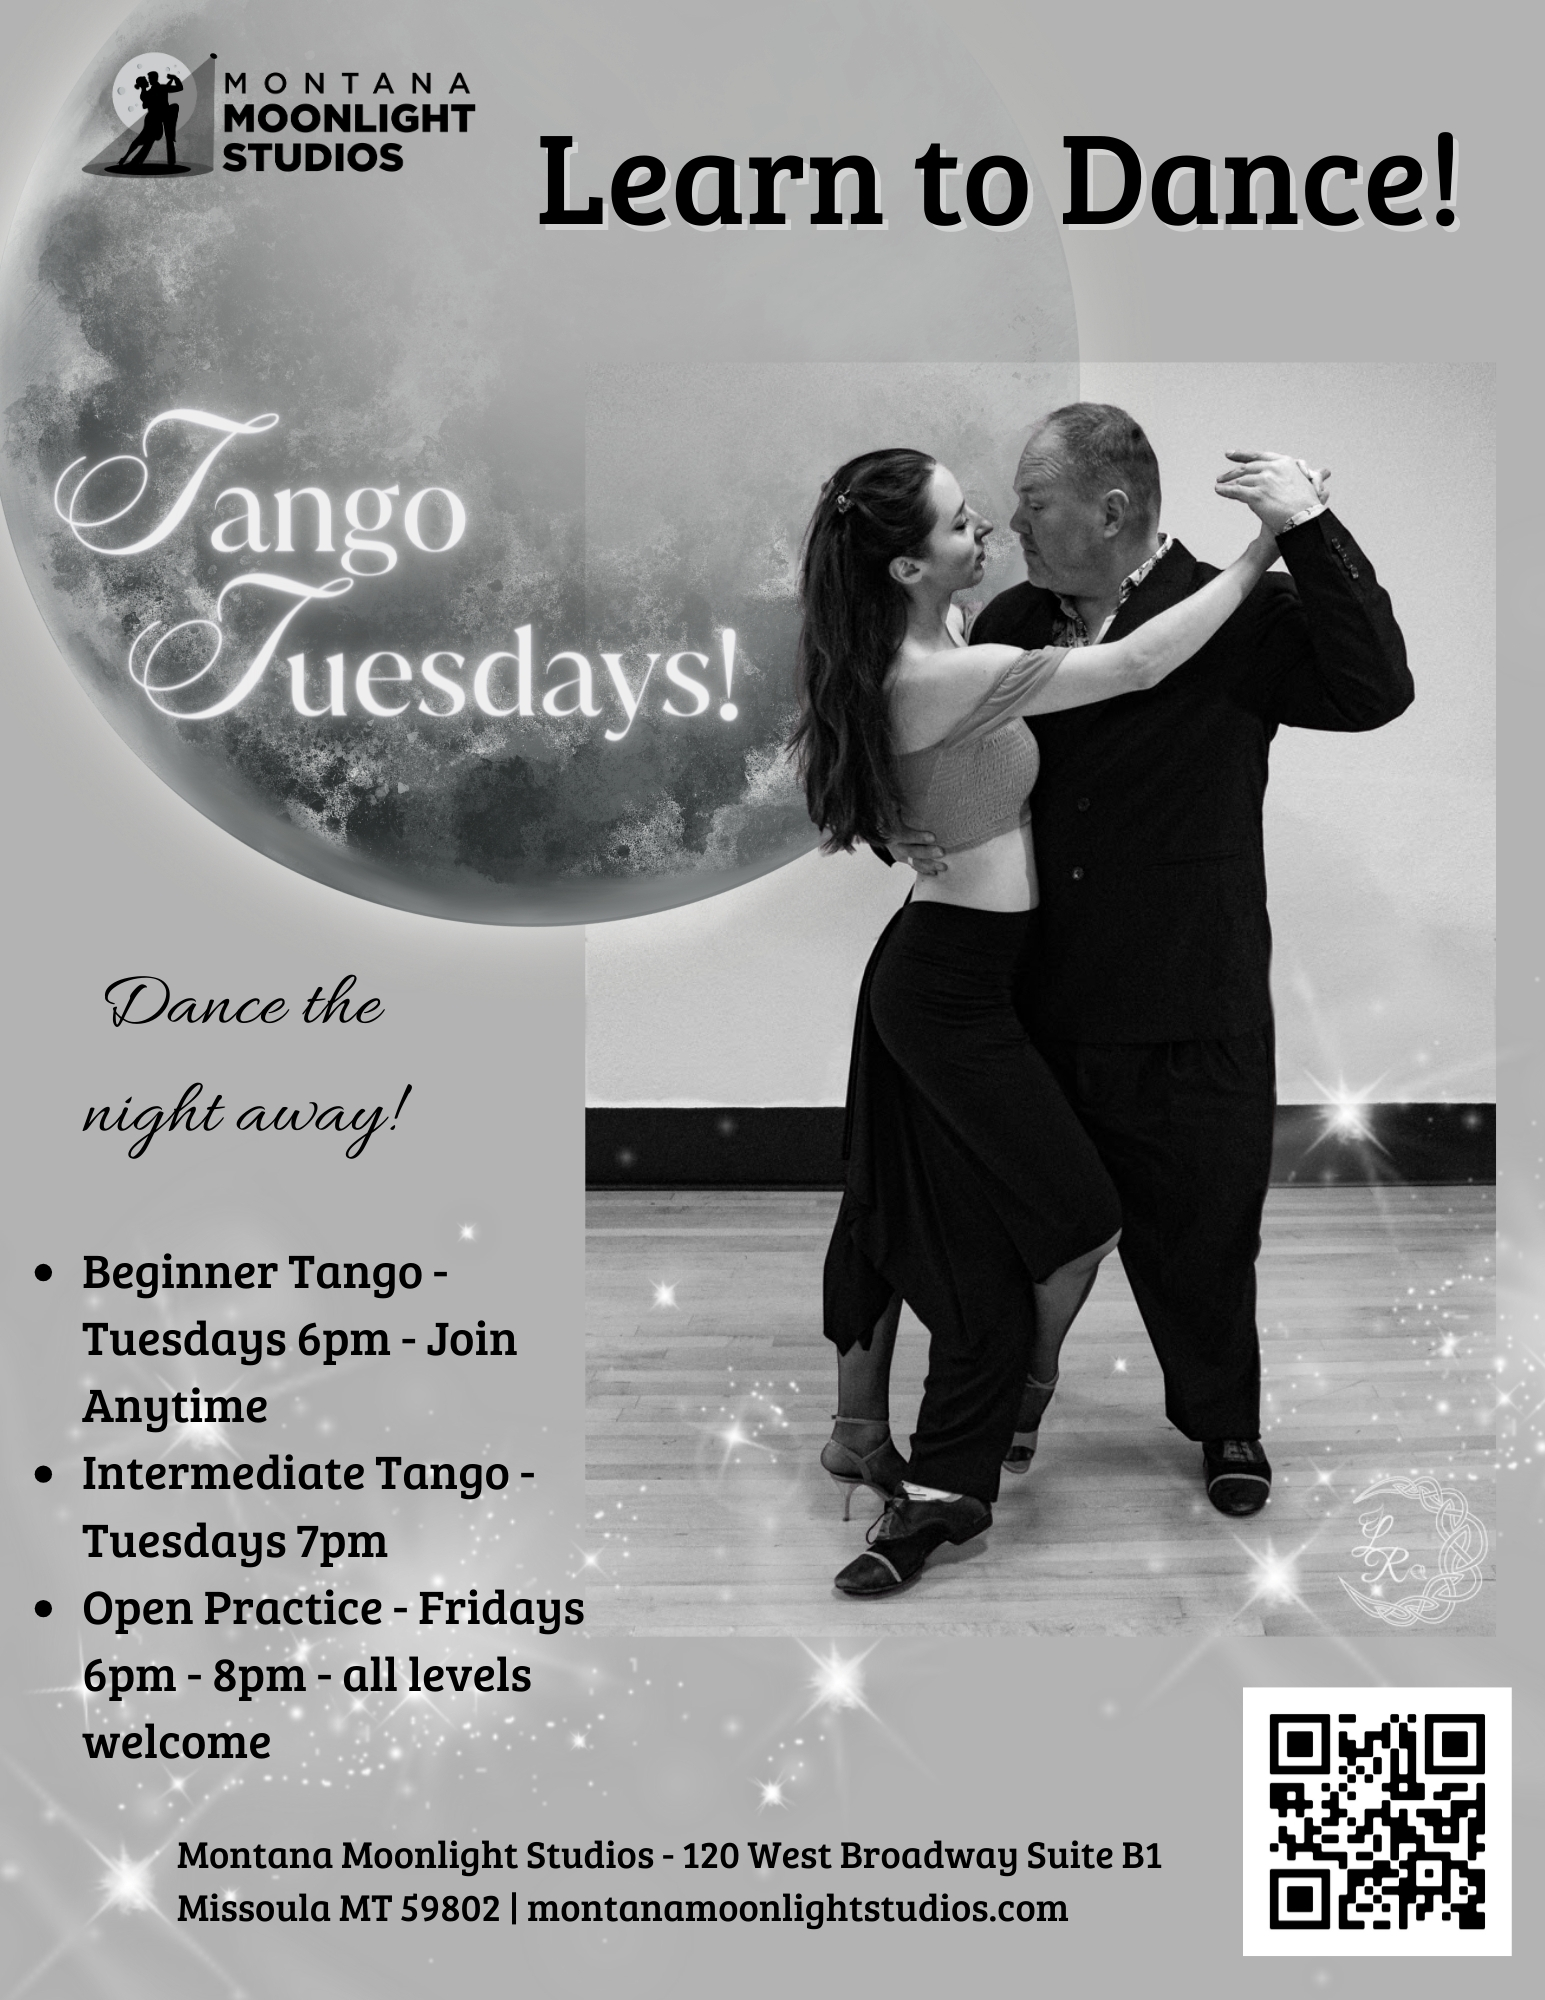 Tango Tuesdays at Montana Moonlight Studios Missoula MT